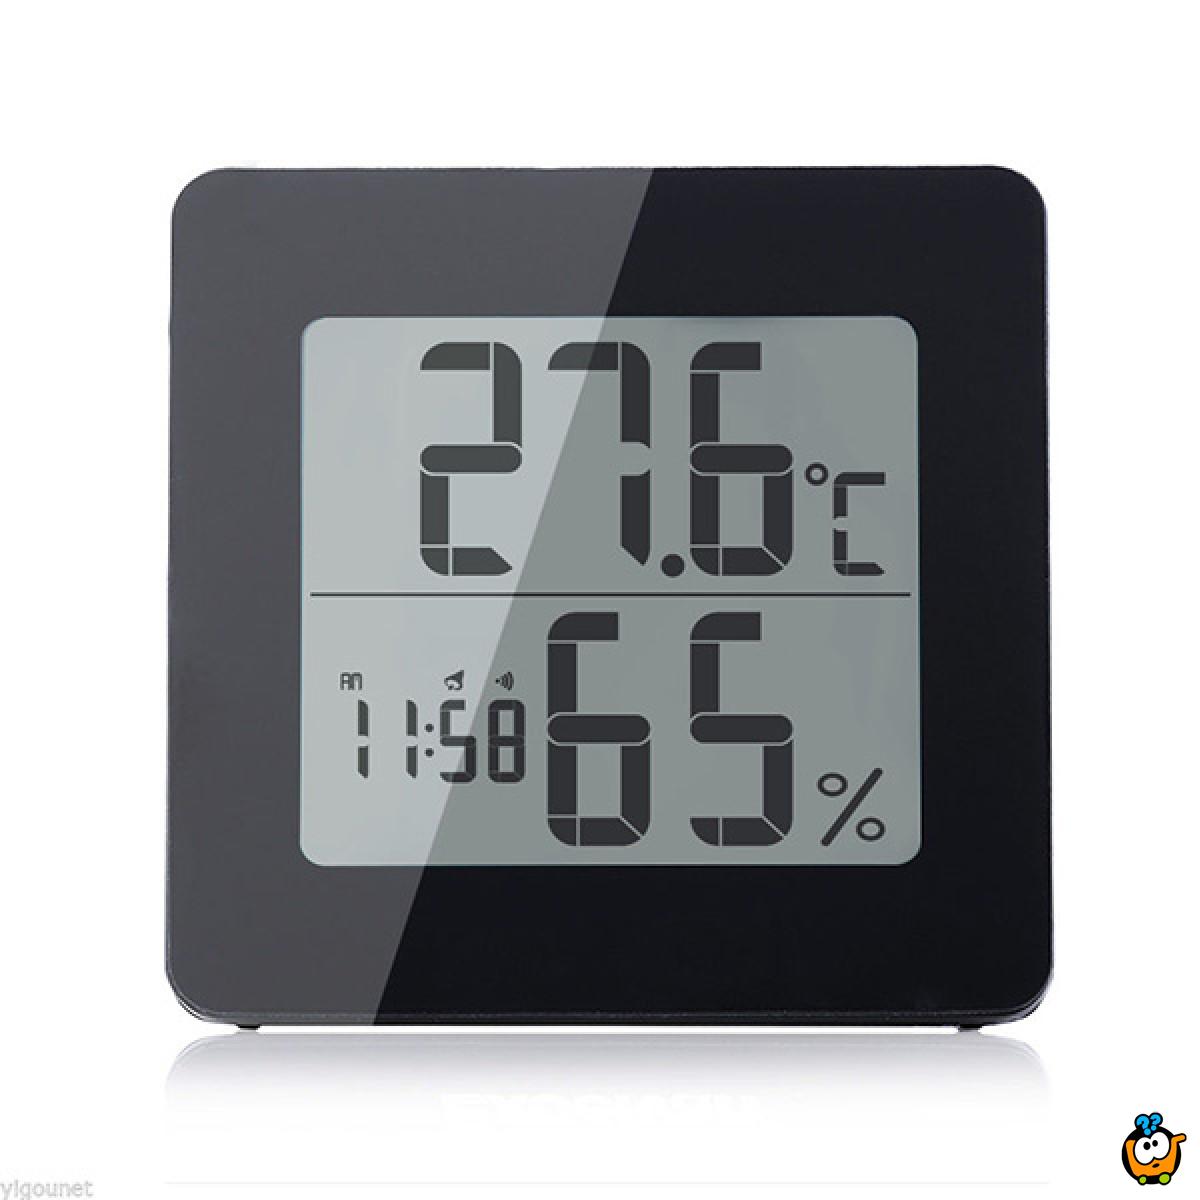 Emate - Digitalni termometar, merač vlažnosti, sat + alarm